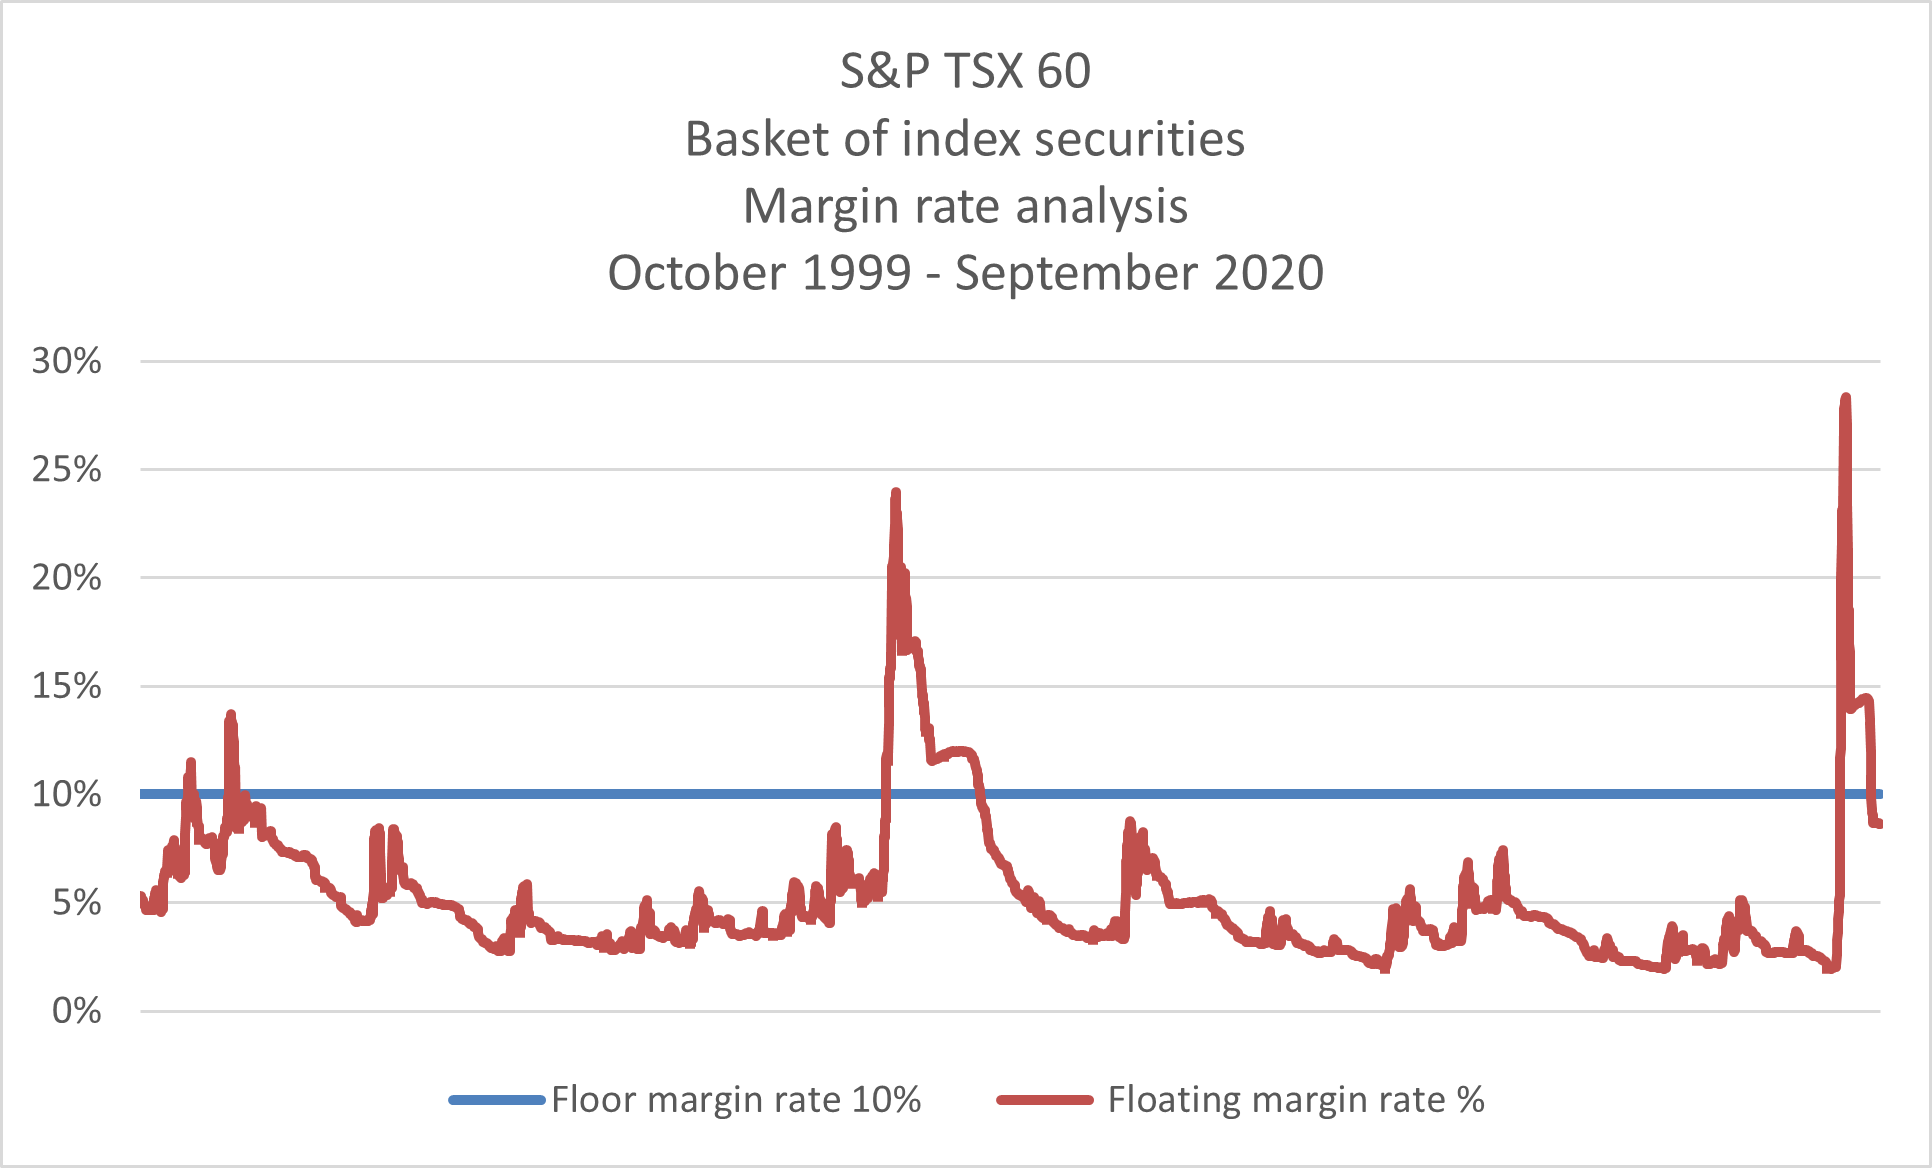 S&P TSX 60 Basket of index securities – margin rate analysis 1999 - 2020